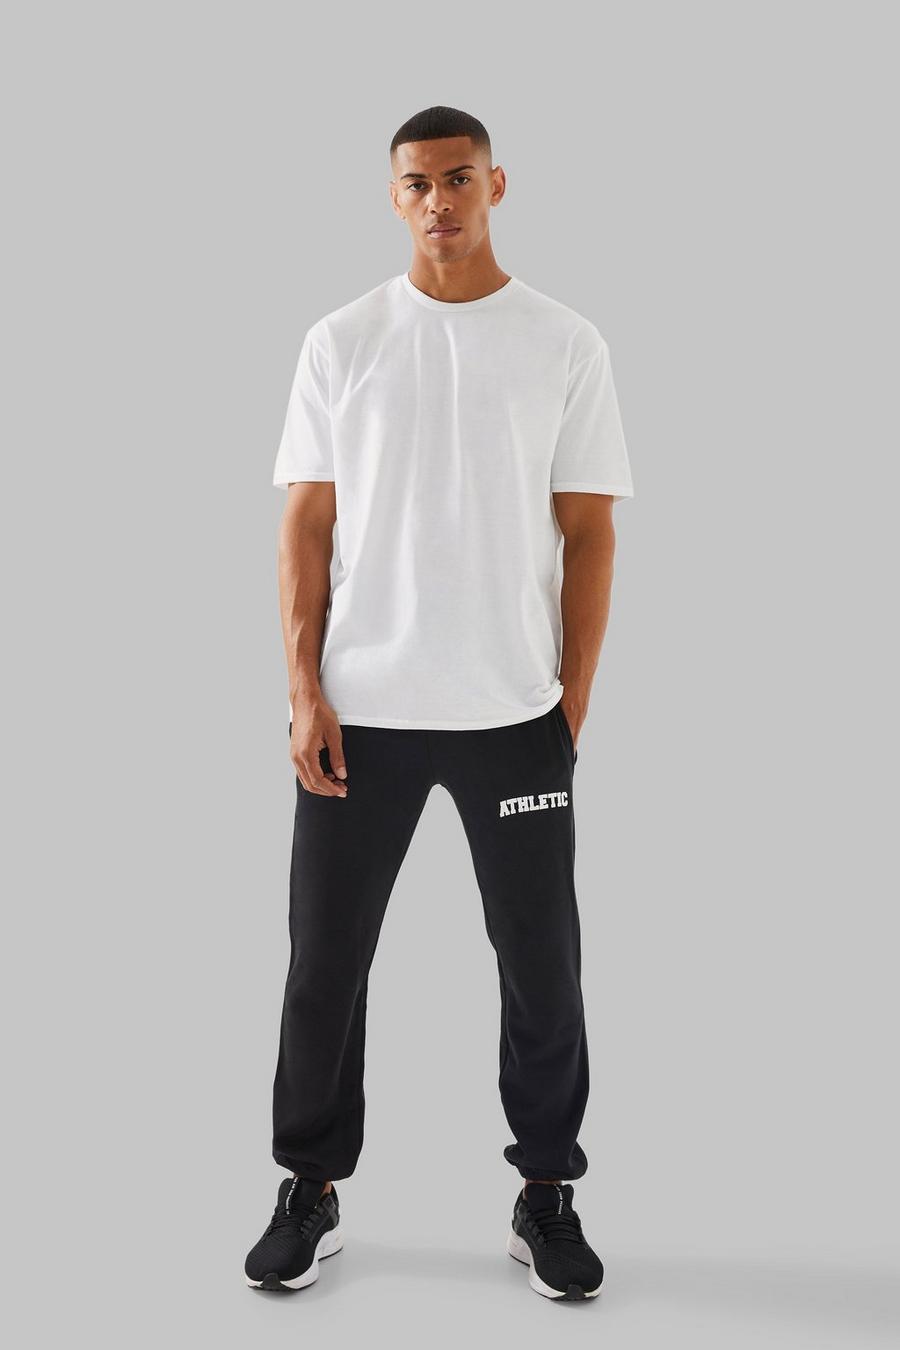 Oversize Trainingsanzug mit Man Active Athletic Print, White